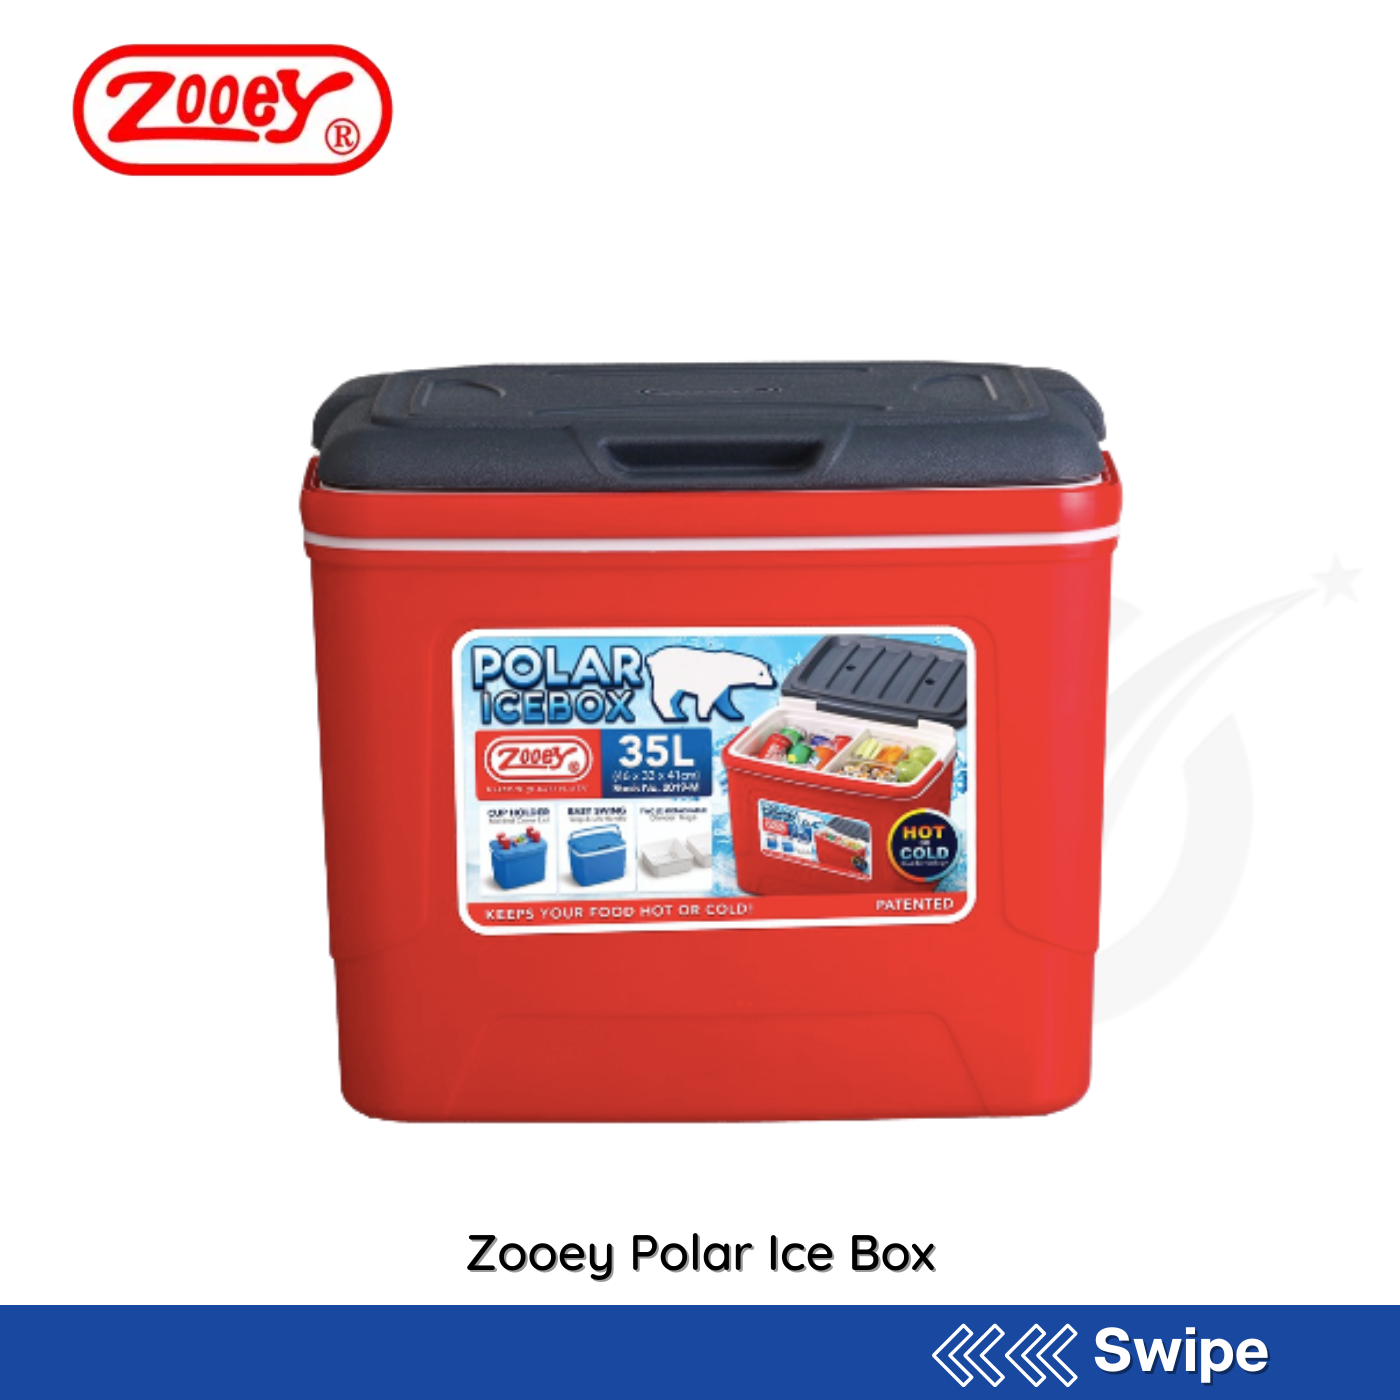 Zooey Polar Ice Box - People's Choice Marketing